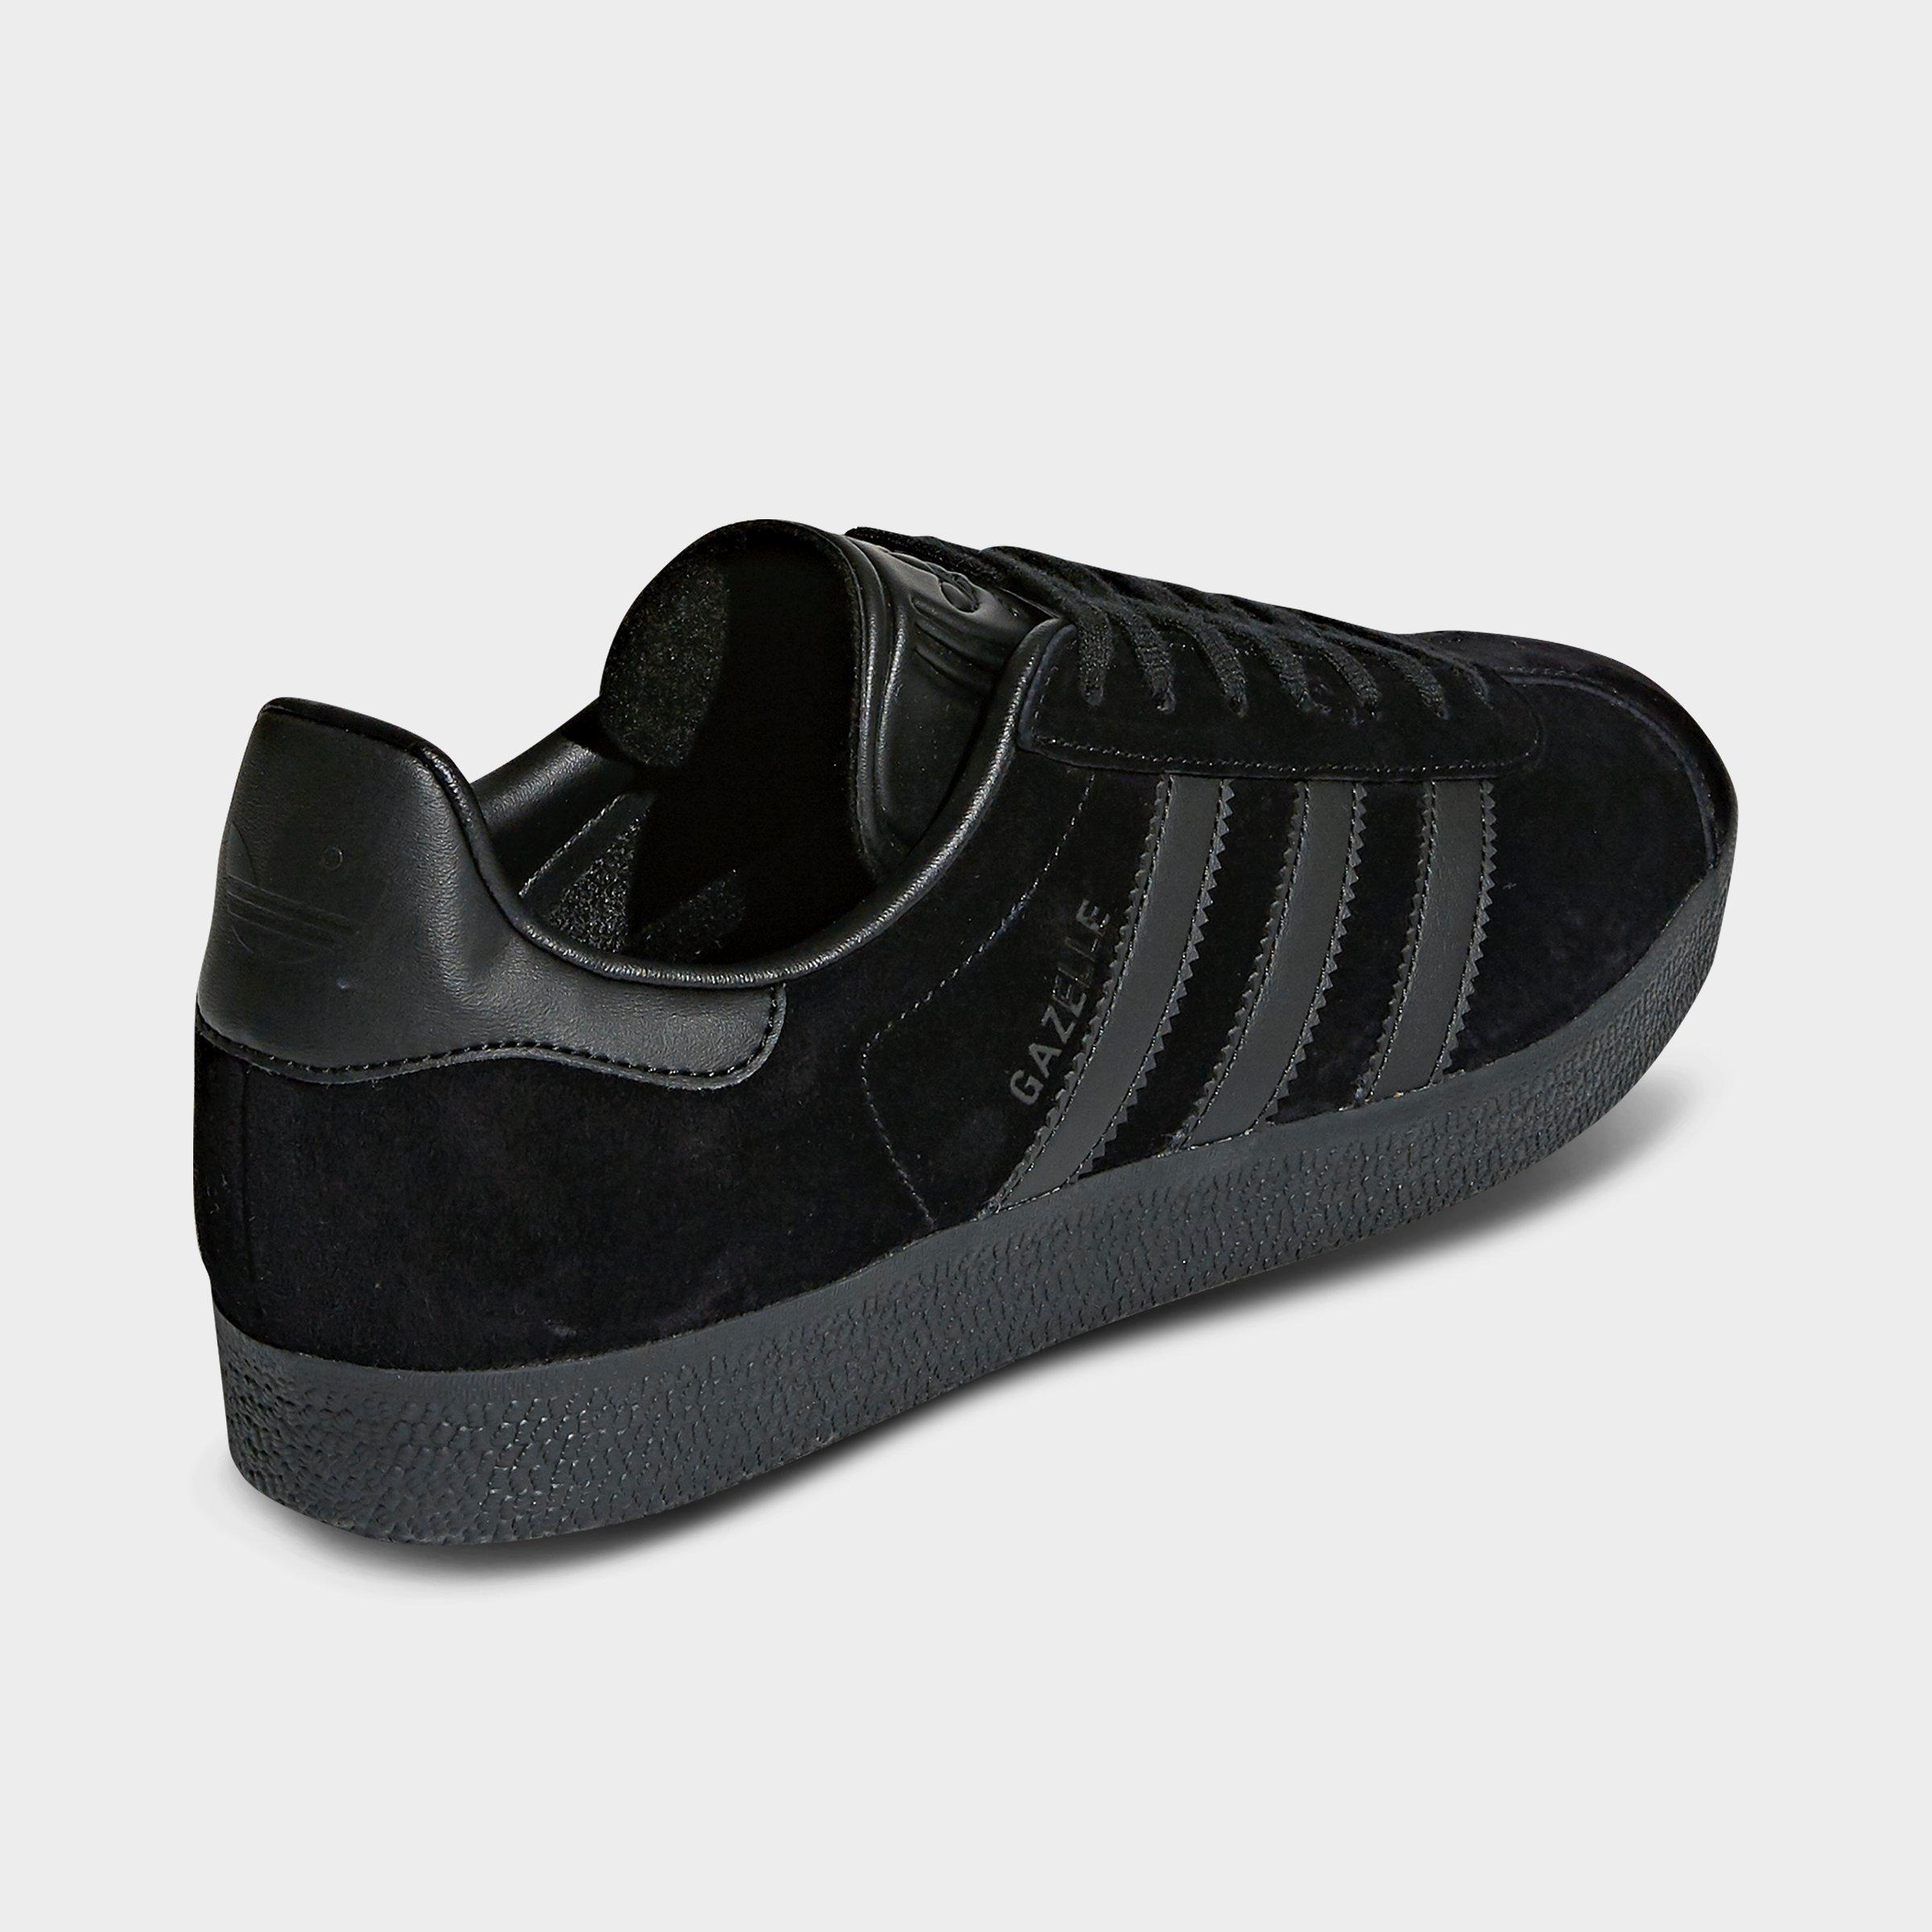 adidas gazelle black shoes